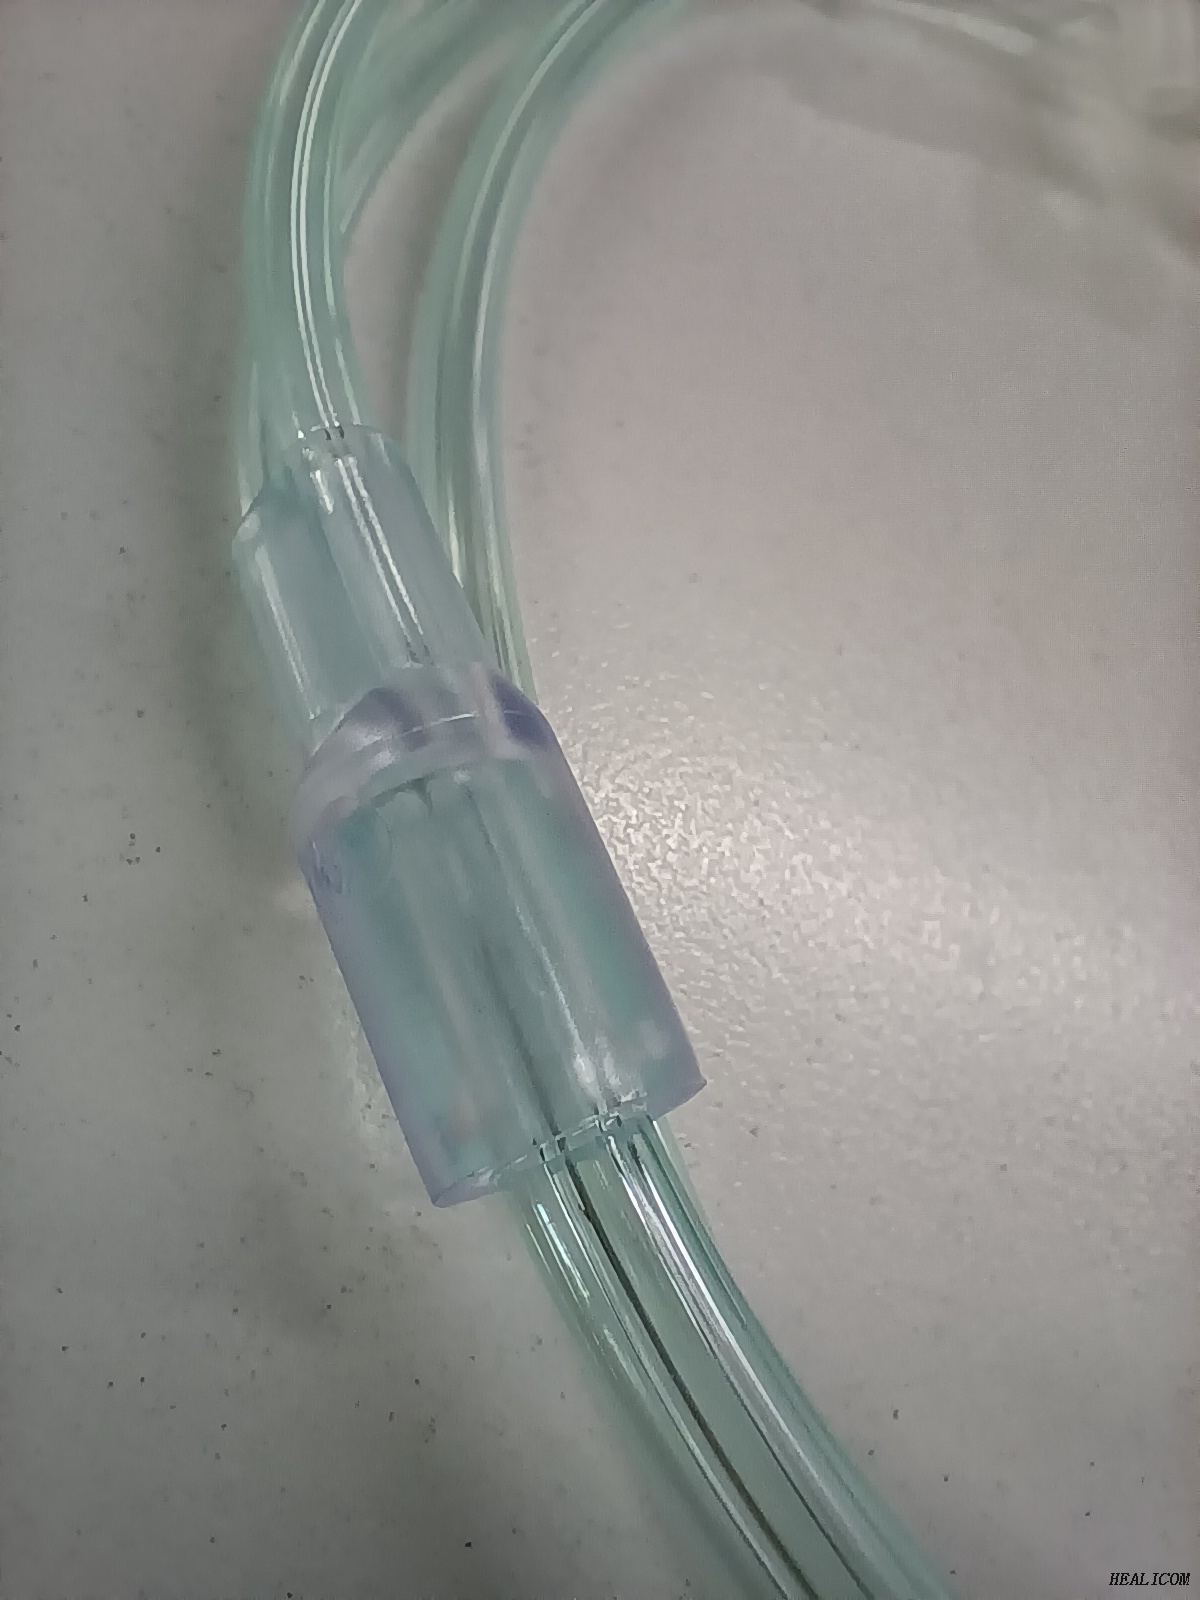 Cánula de oxígeno nasal paitent de consumibles médicos hospitalarios